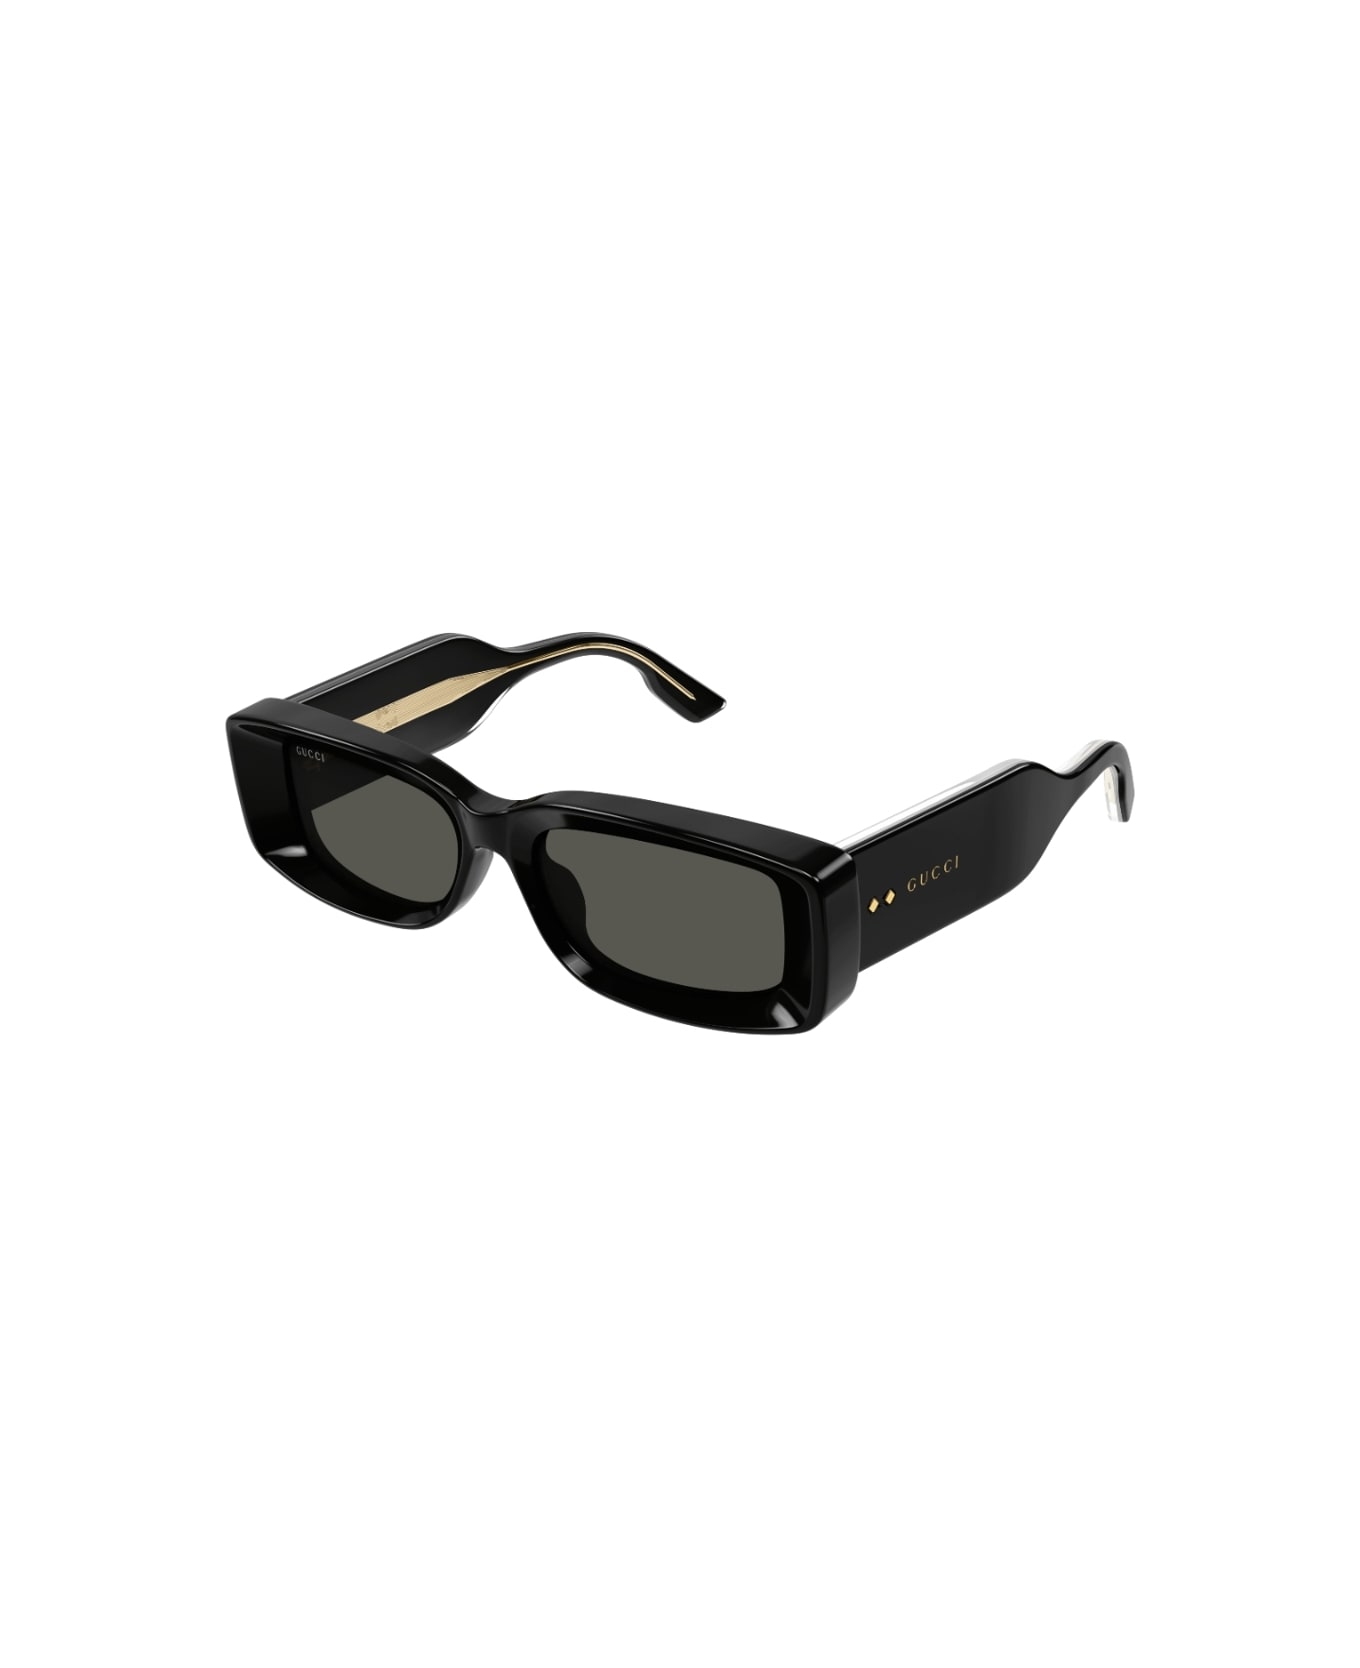 Gucci Eyewear GG1528s-001 Sunglasses - Nero